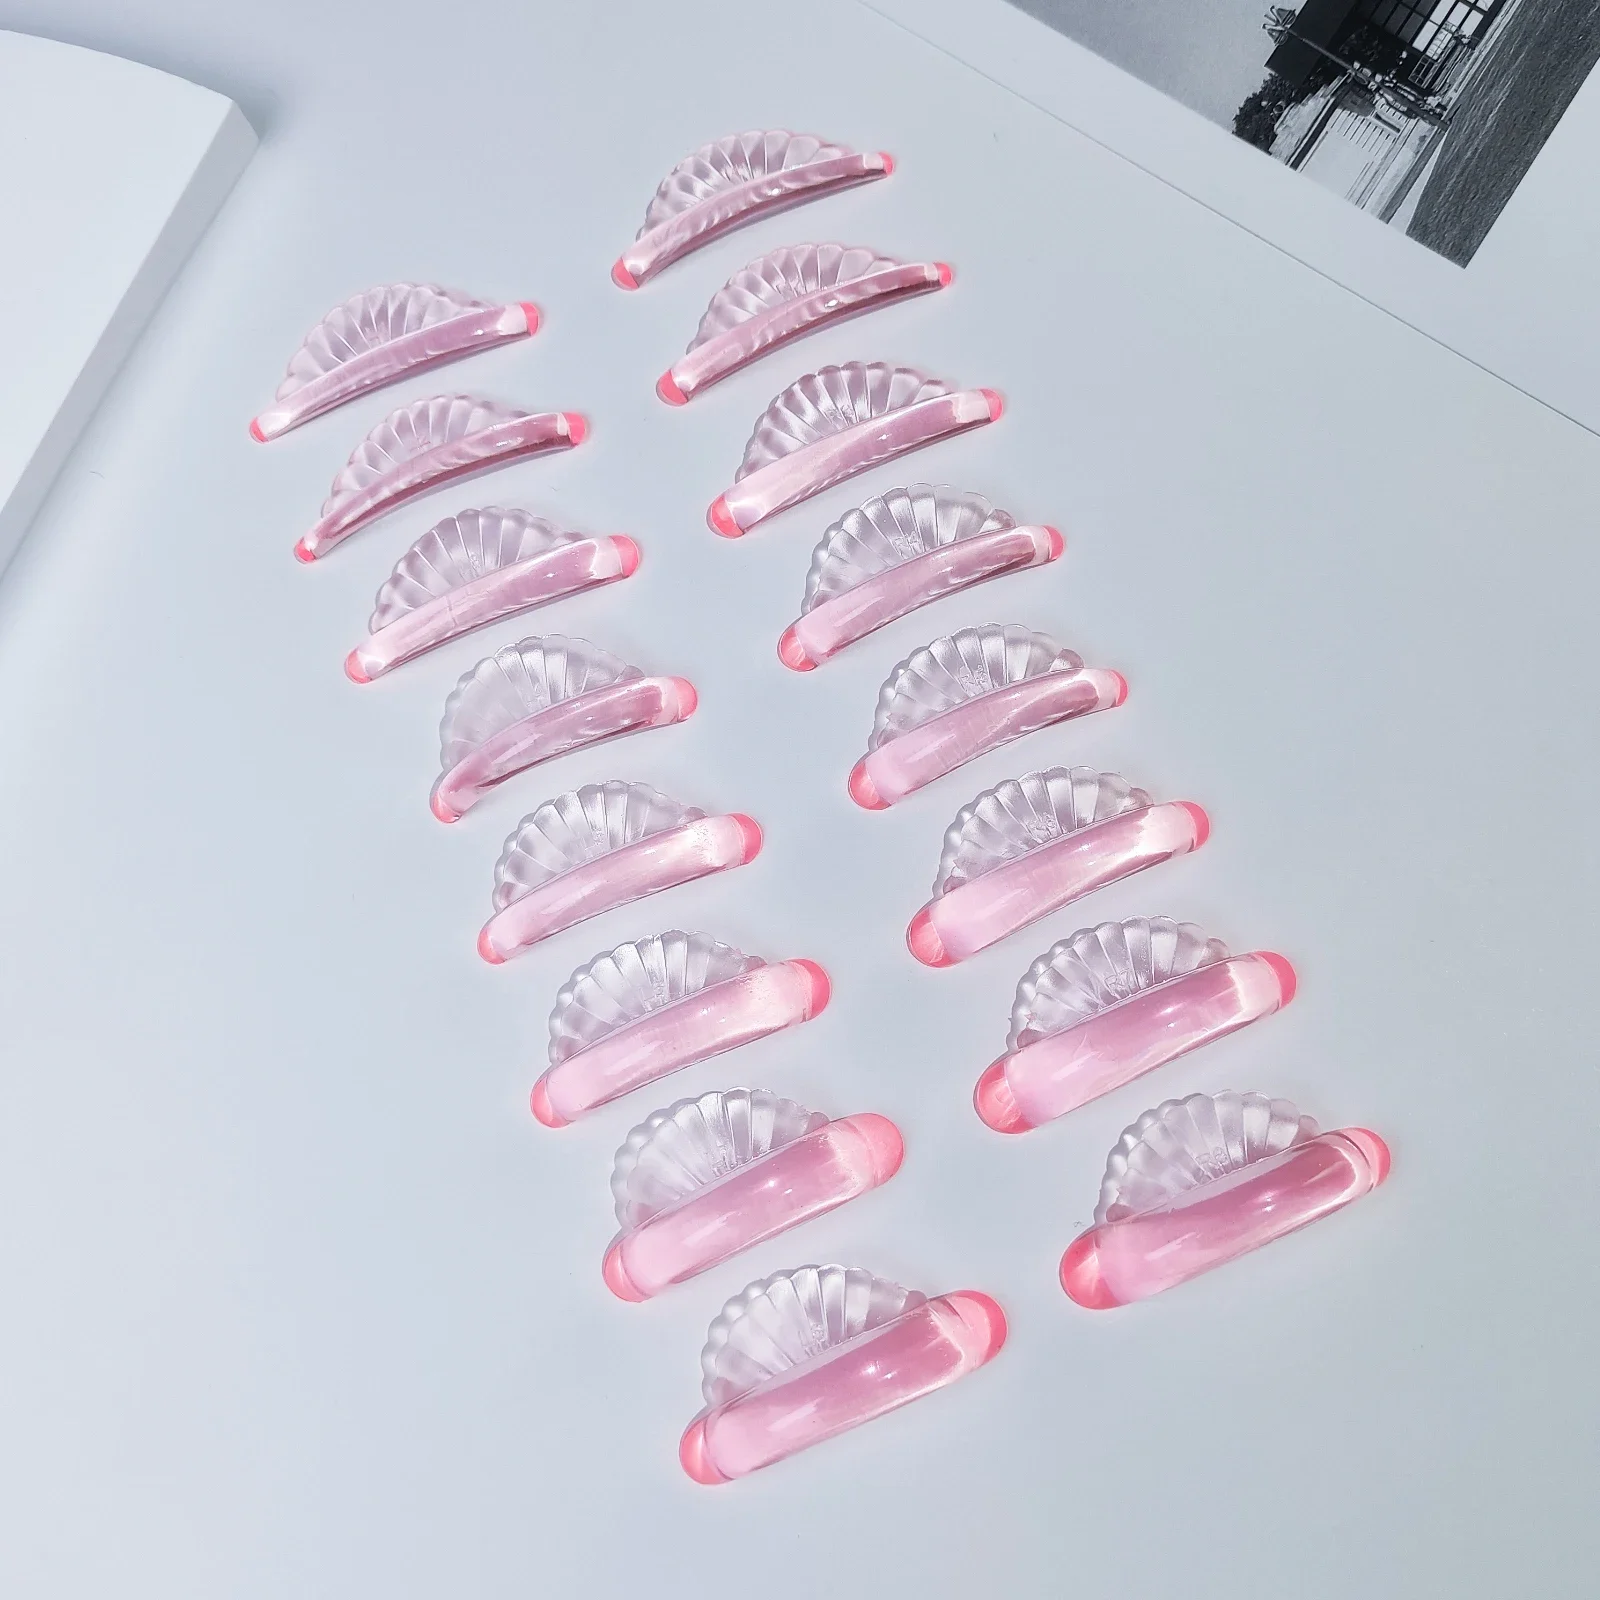 Libeauty 접착제 프리 실리콘 속눈썹 파마 패드, 끈끈한 속눈썹 로드 쉴드 리프팅, 3D 속눈썹 컬러 액세서리 도구, 도매